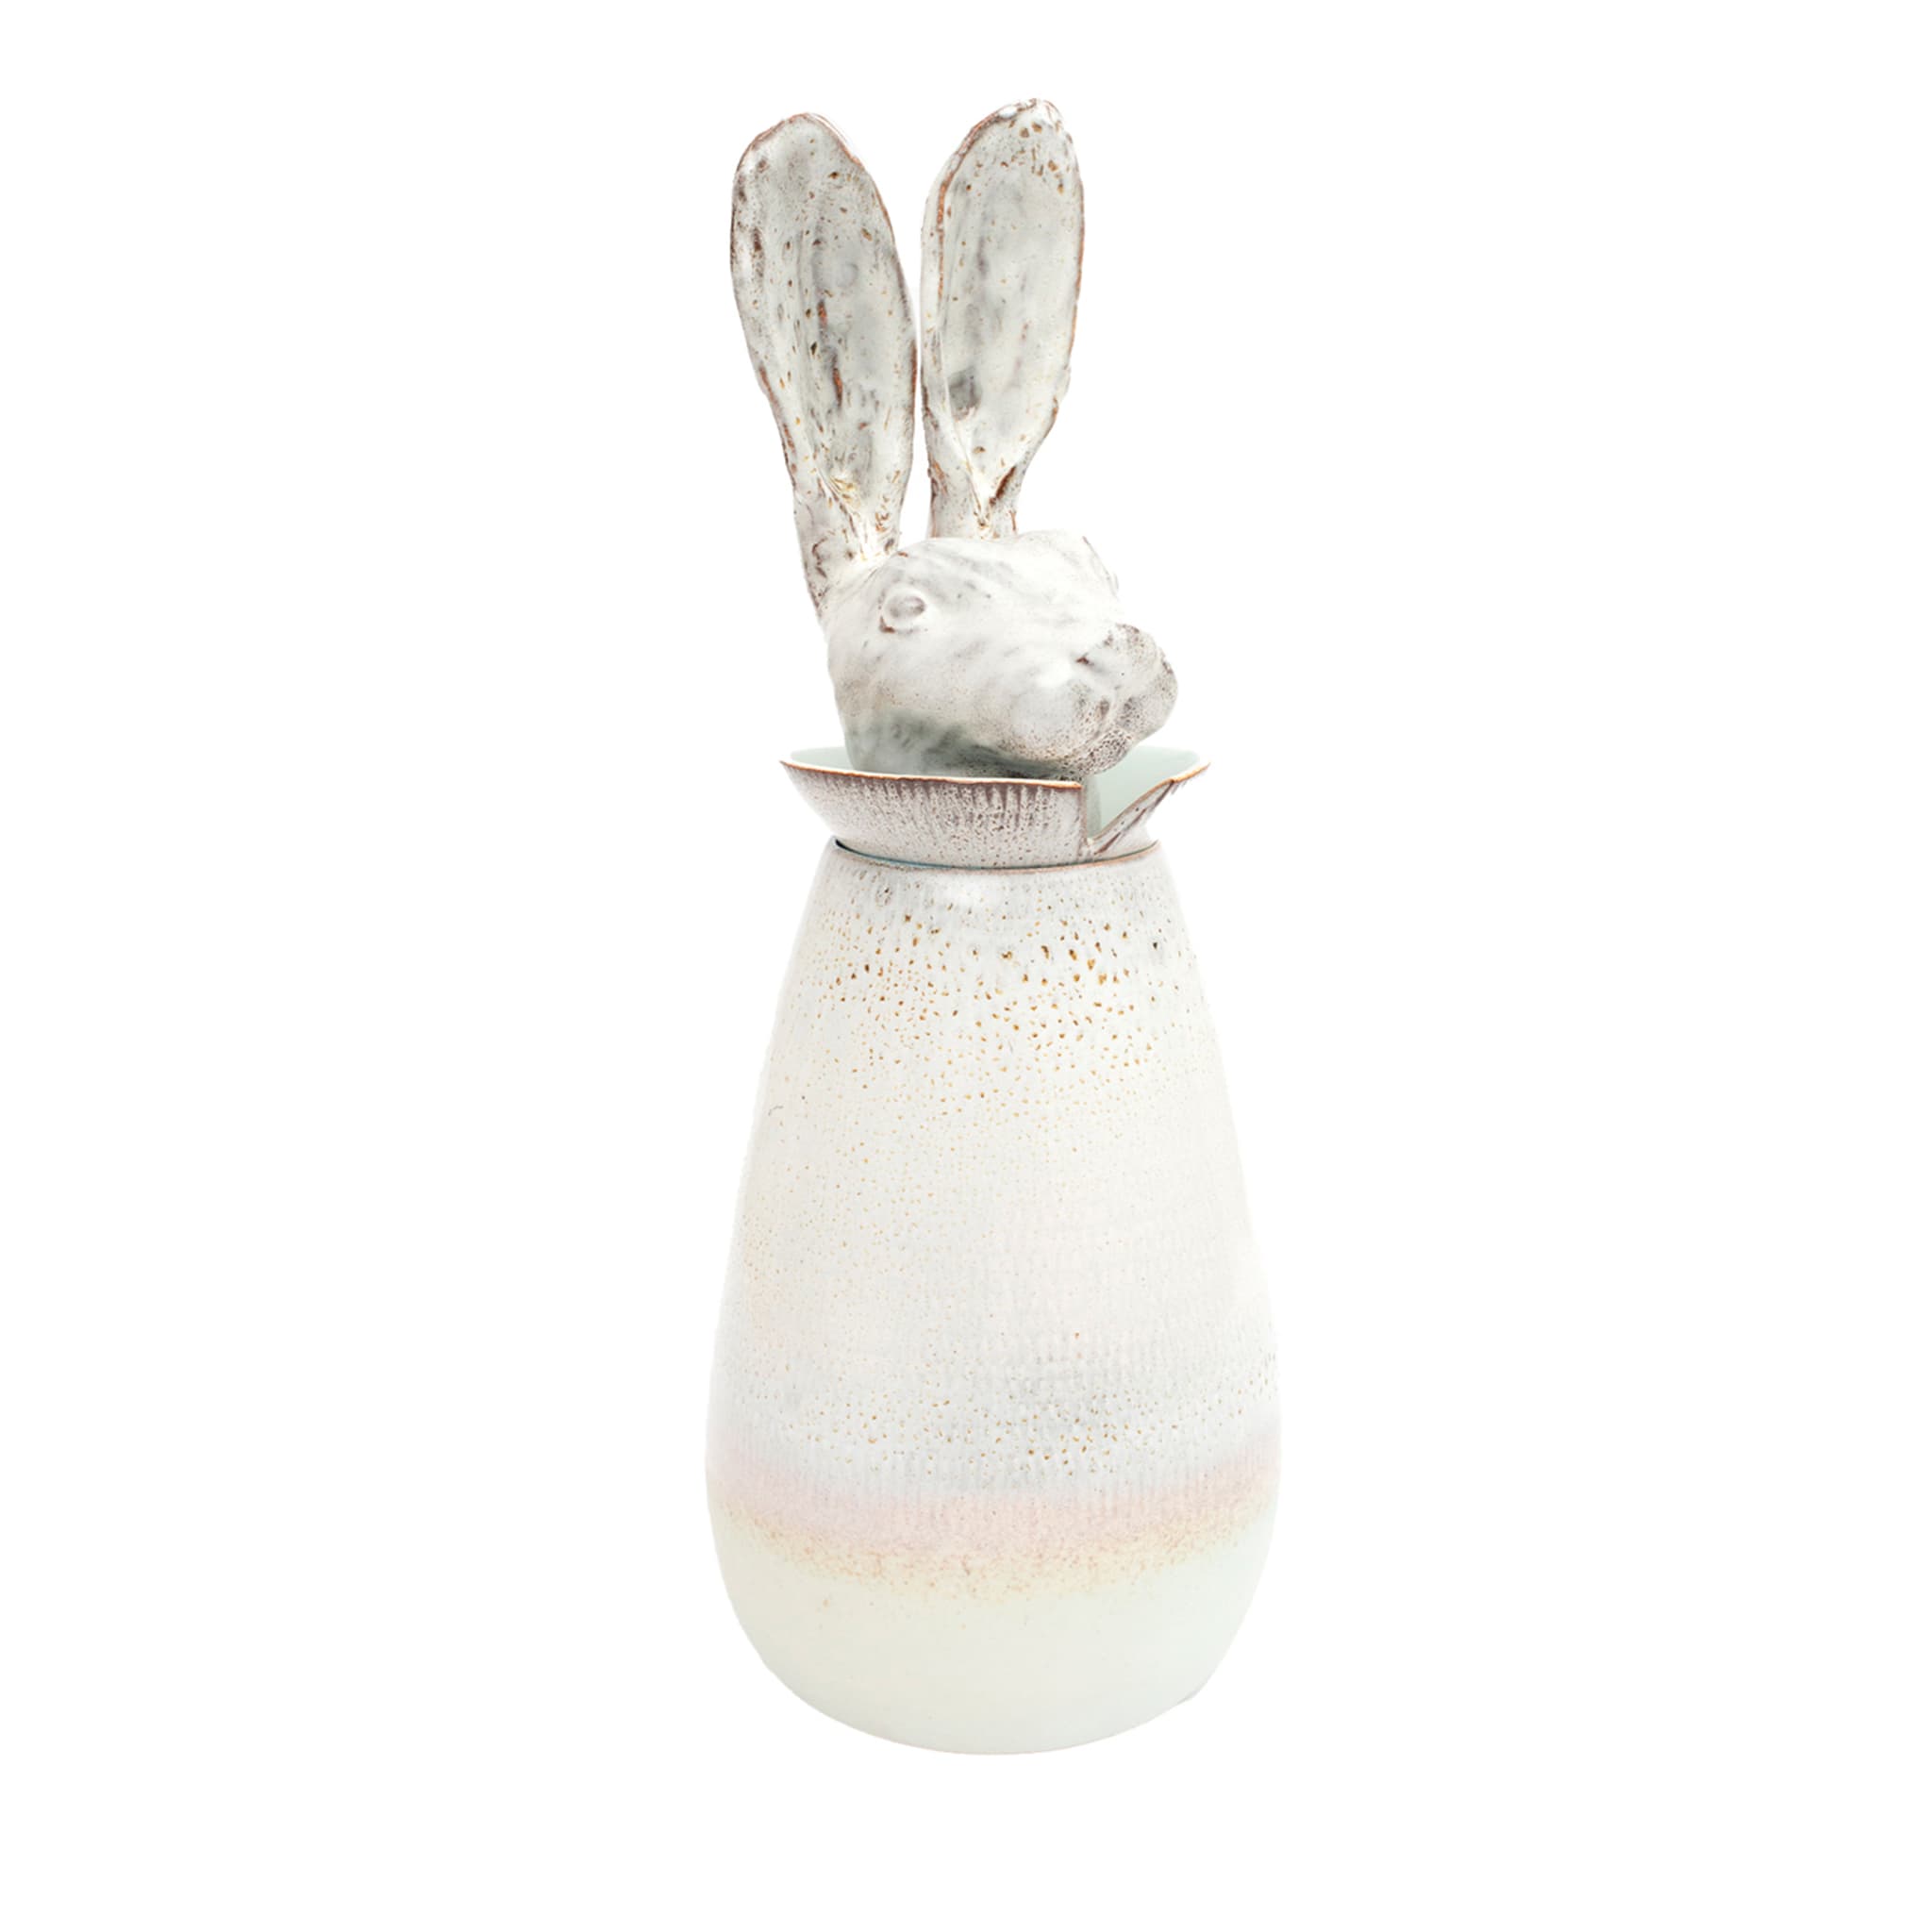 Canopo rabbit vase - Main view